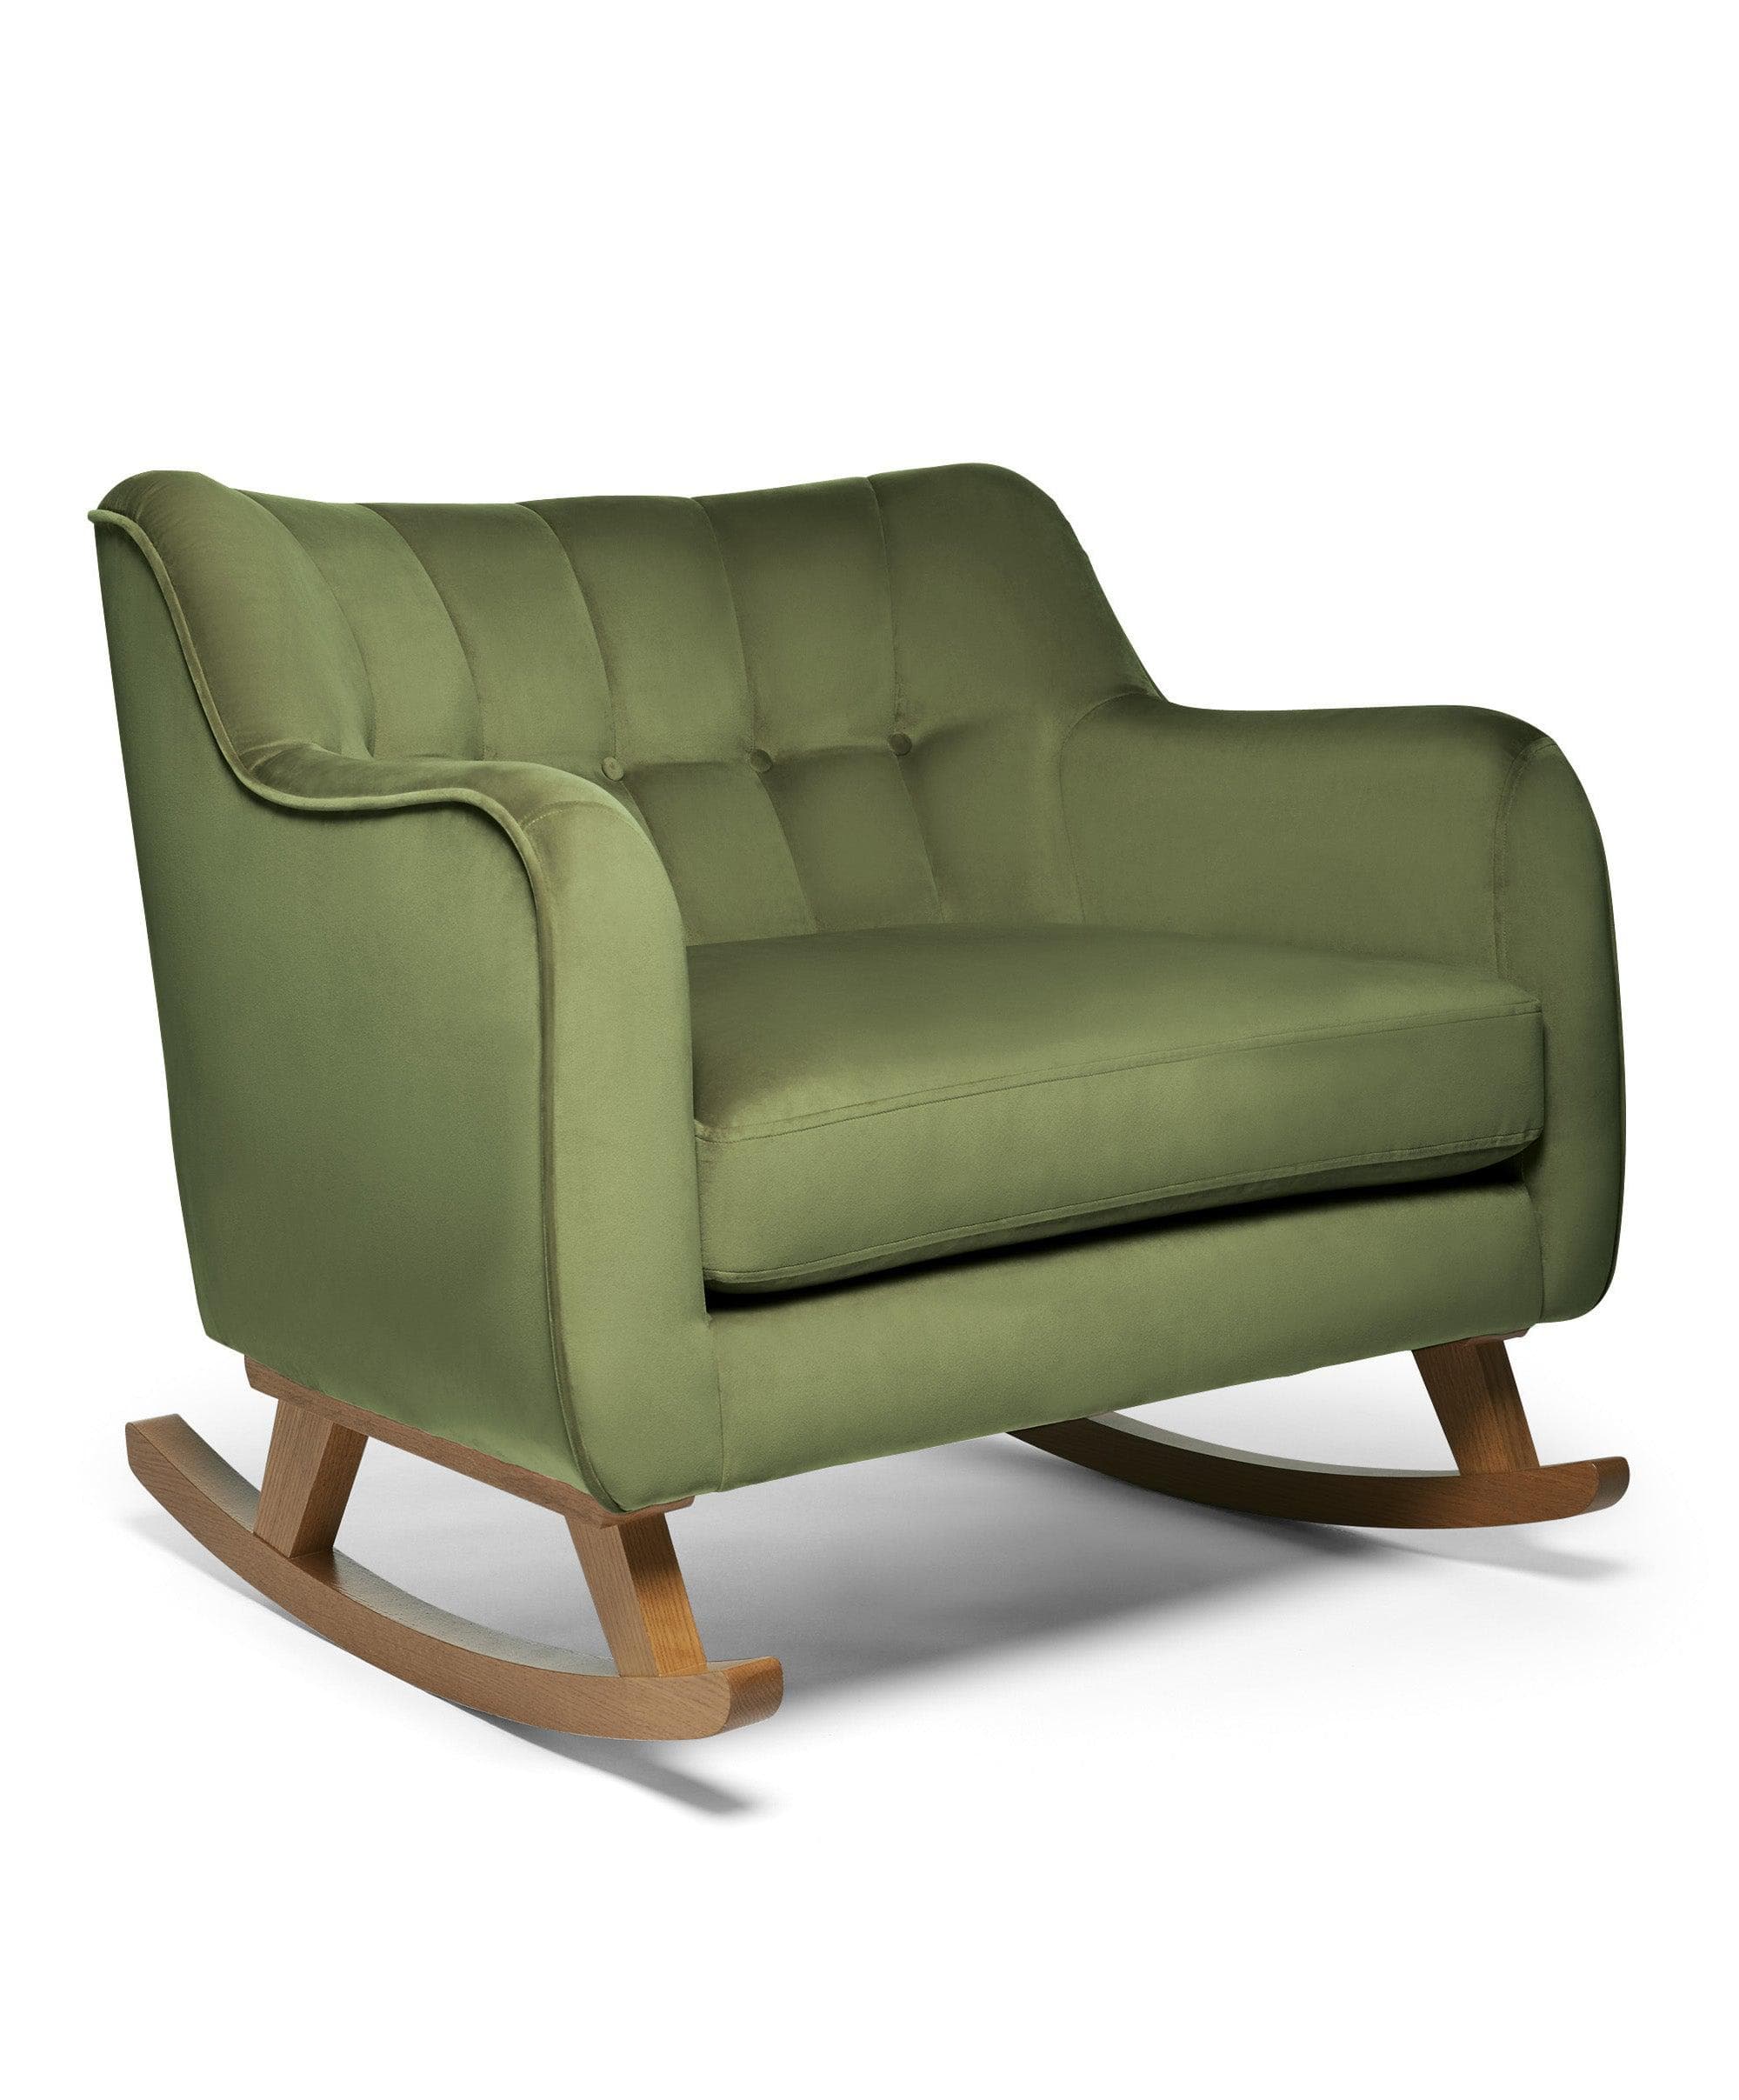 Hilston Cuddle Chair in Velvet - Olive